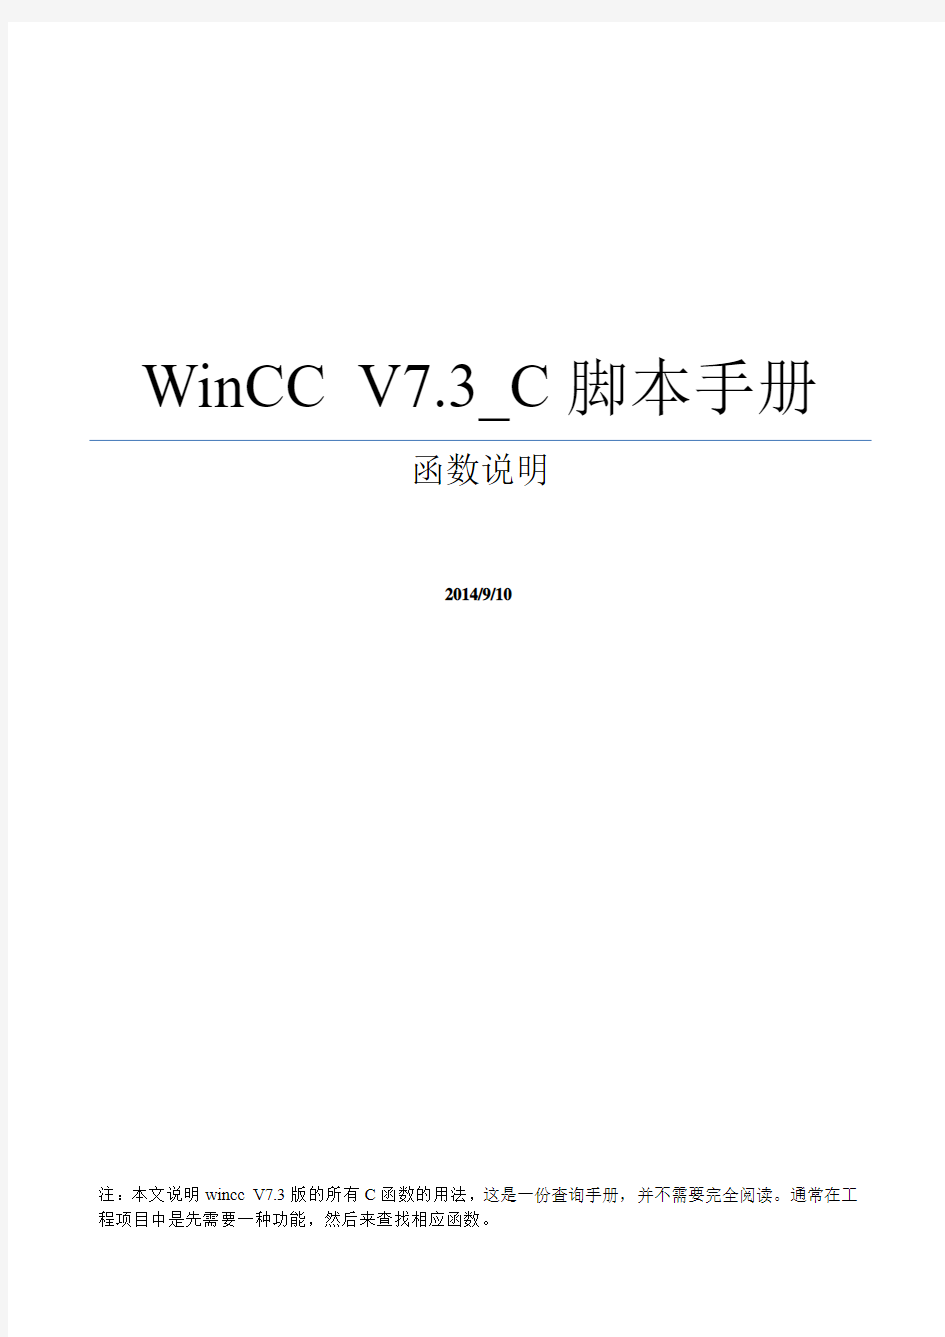 WinCC V7.3_C脚本手册